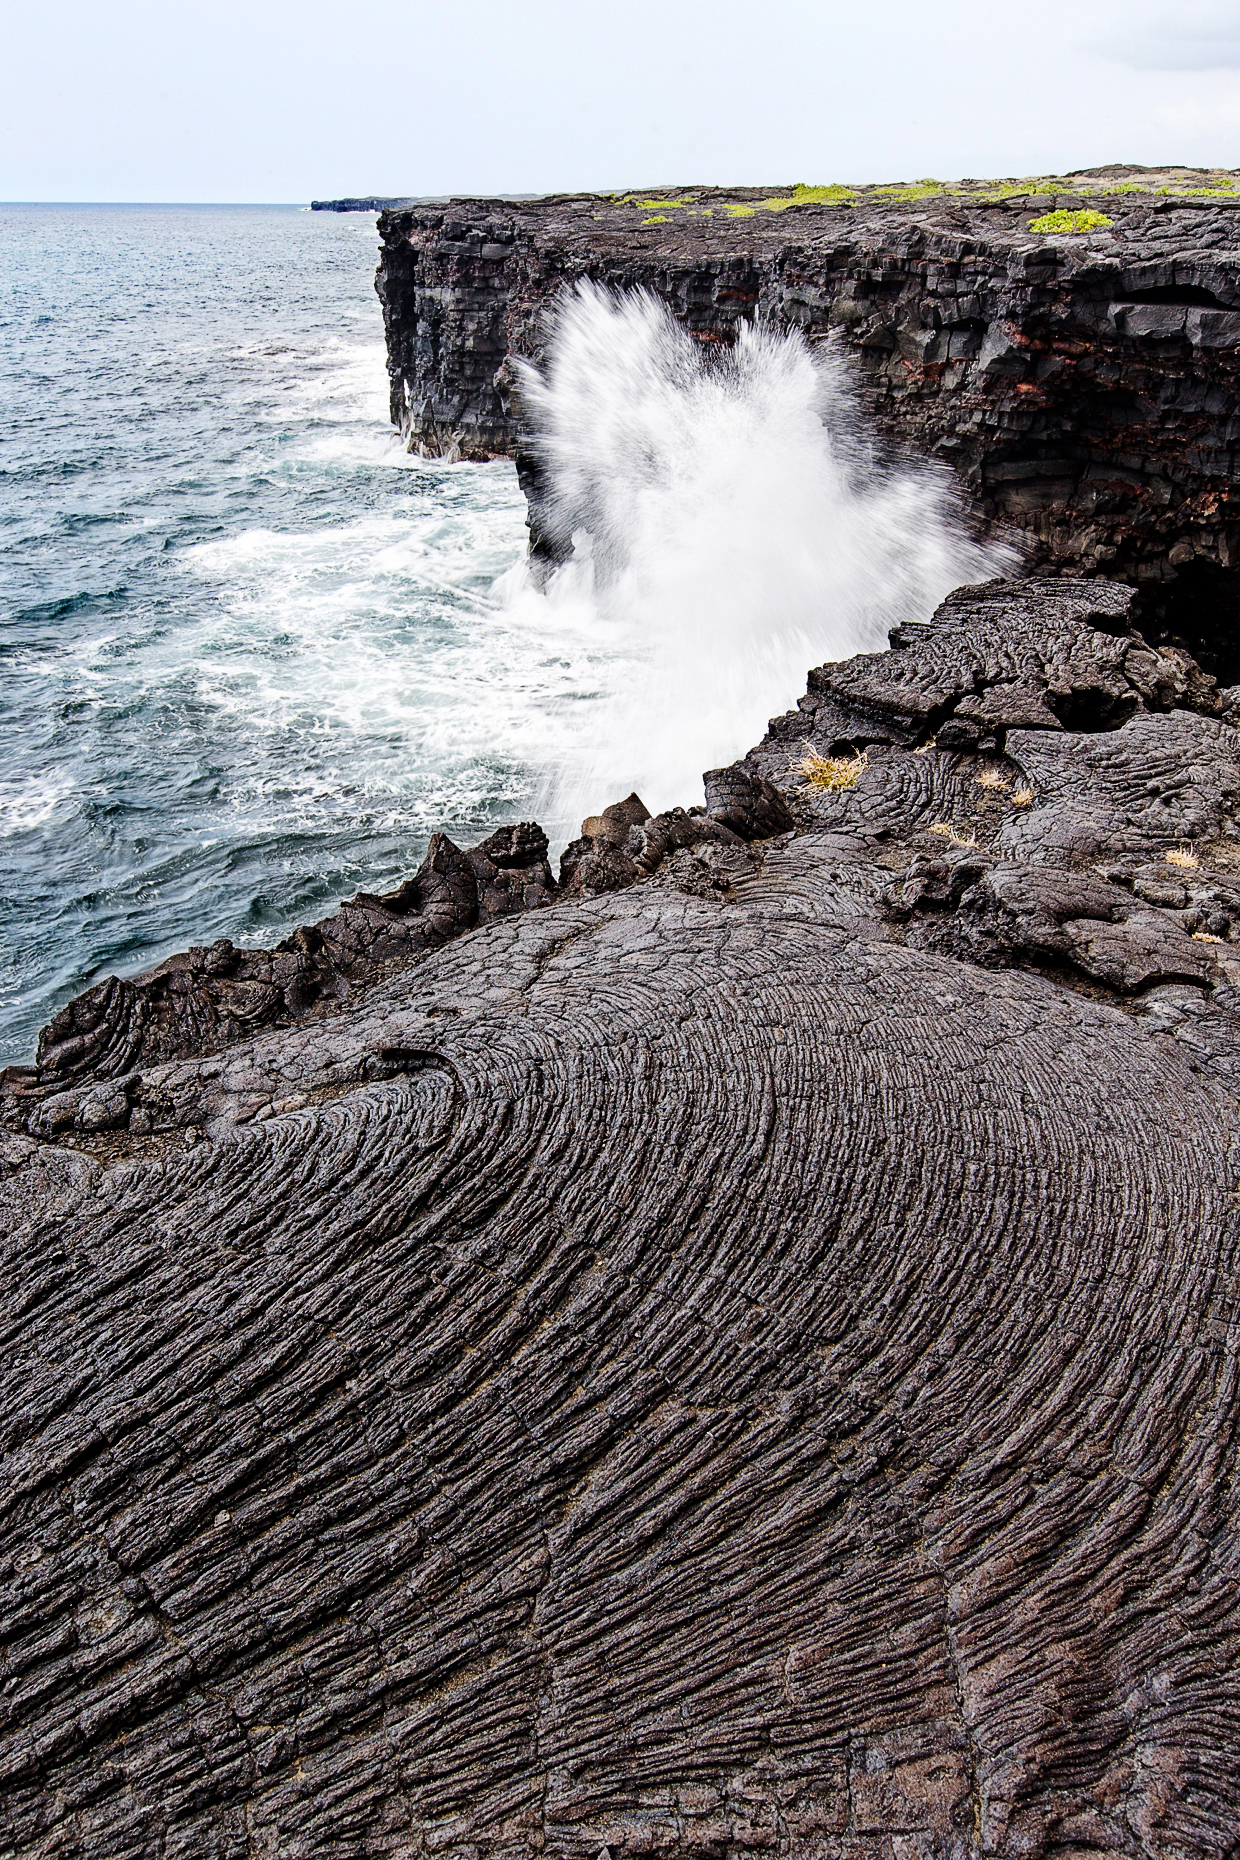 Pacific Ocean waves crash against volcanic rock, Hawai